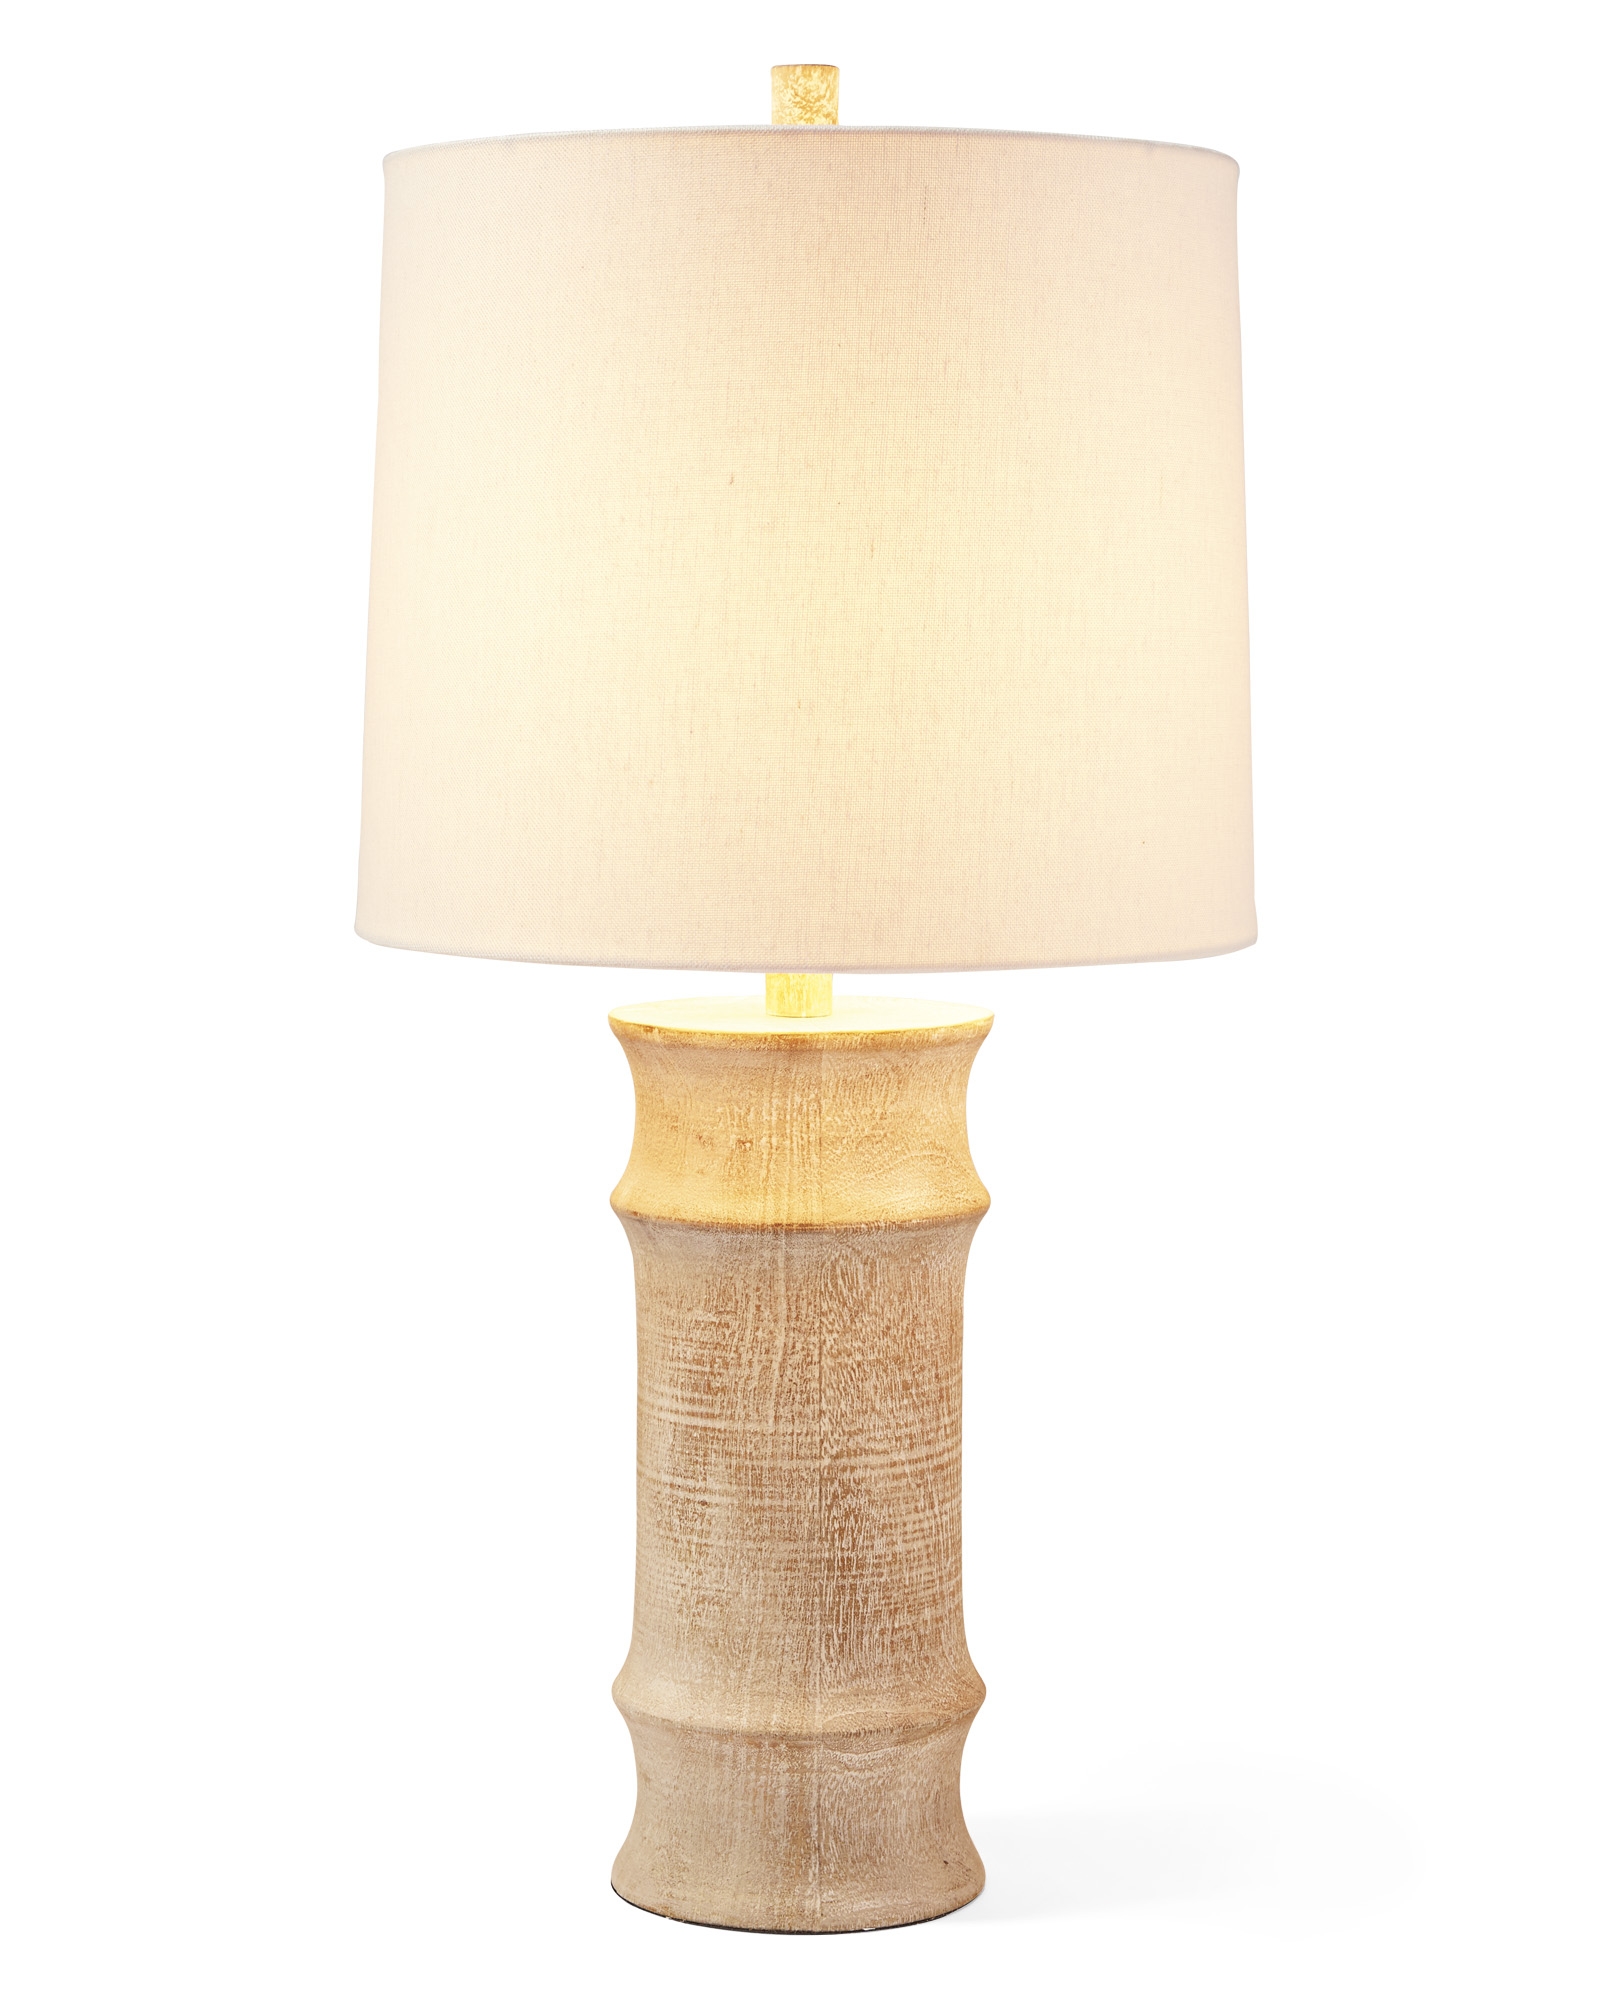 Halsey Table Lamp - Image 1